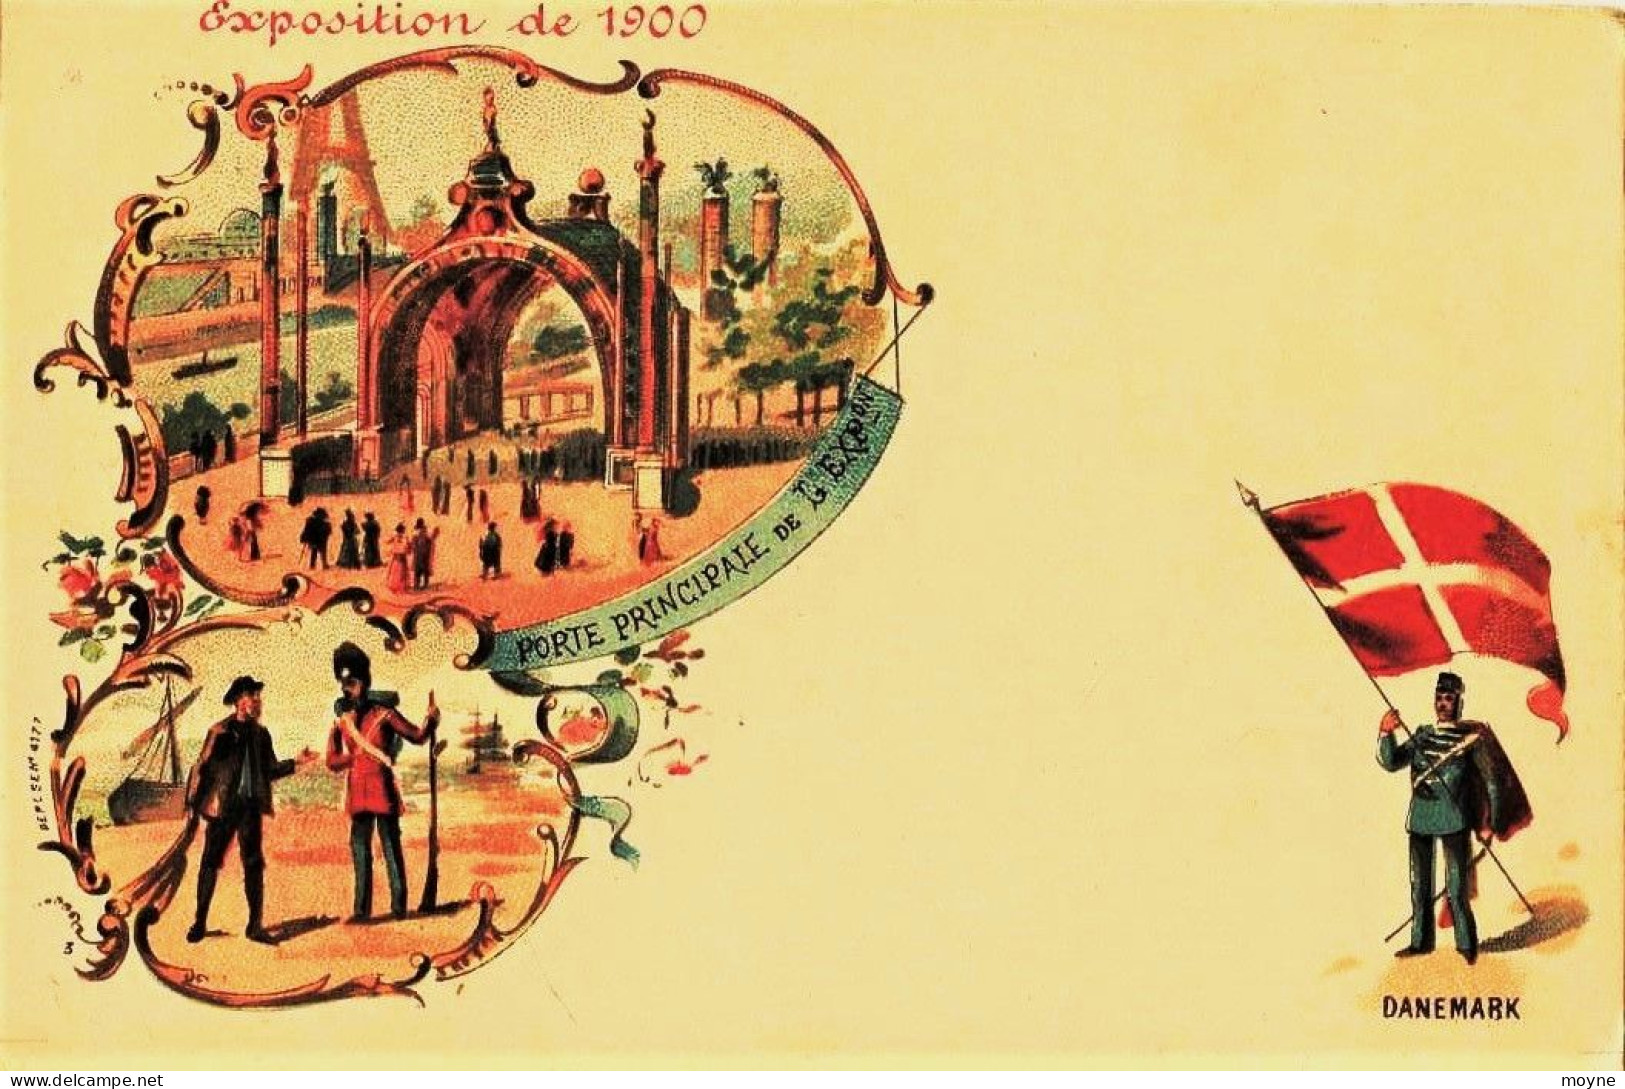 1823 - DANEMARK  -  EXPOSITION 1900 - CHROMO.   PORTE PRINCIPALE -   Illustrateur - Tentoonstellingen